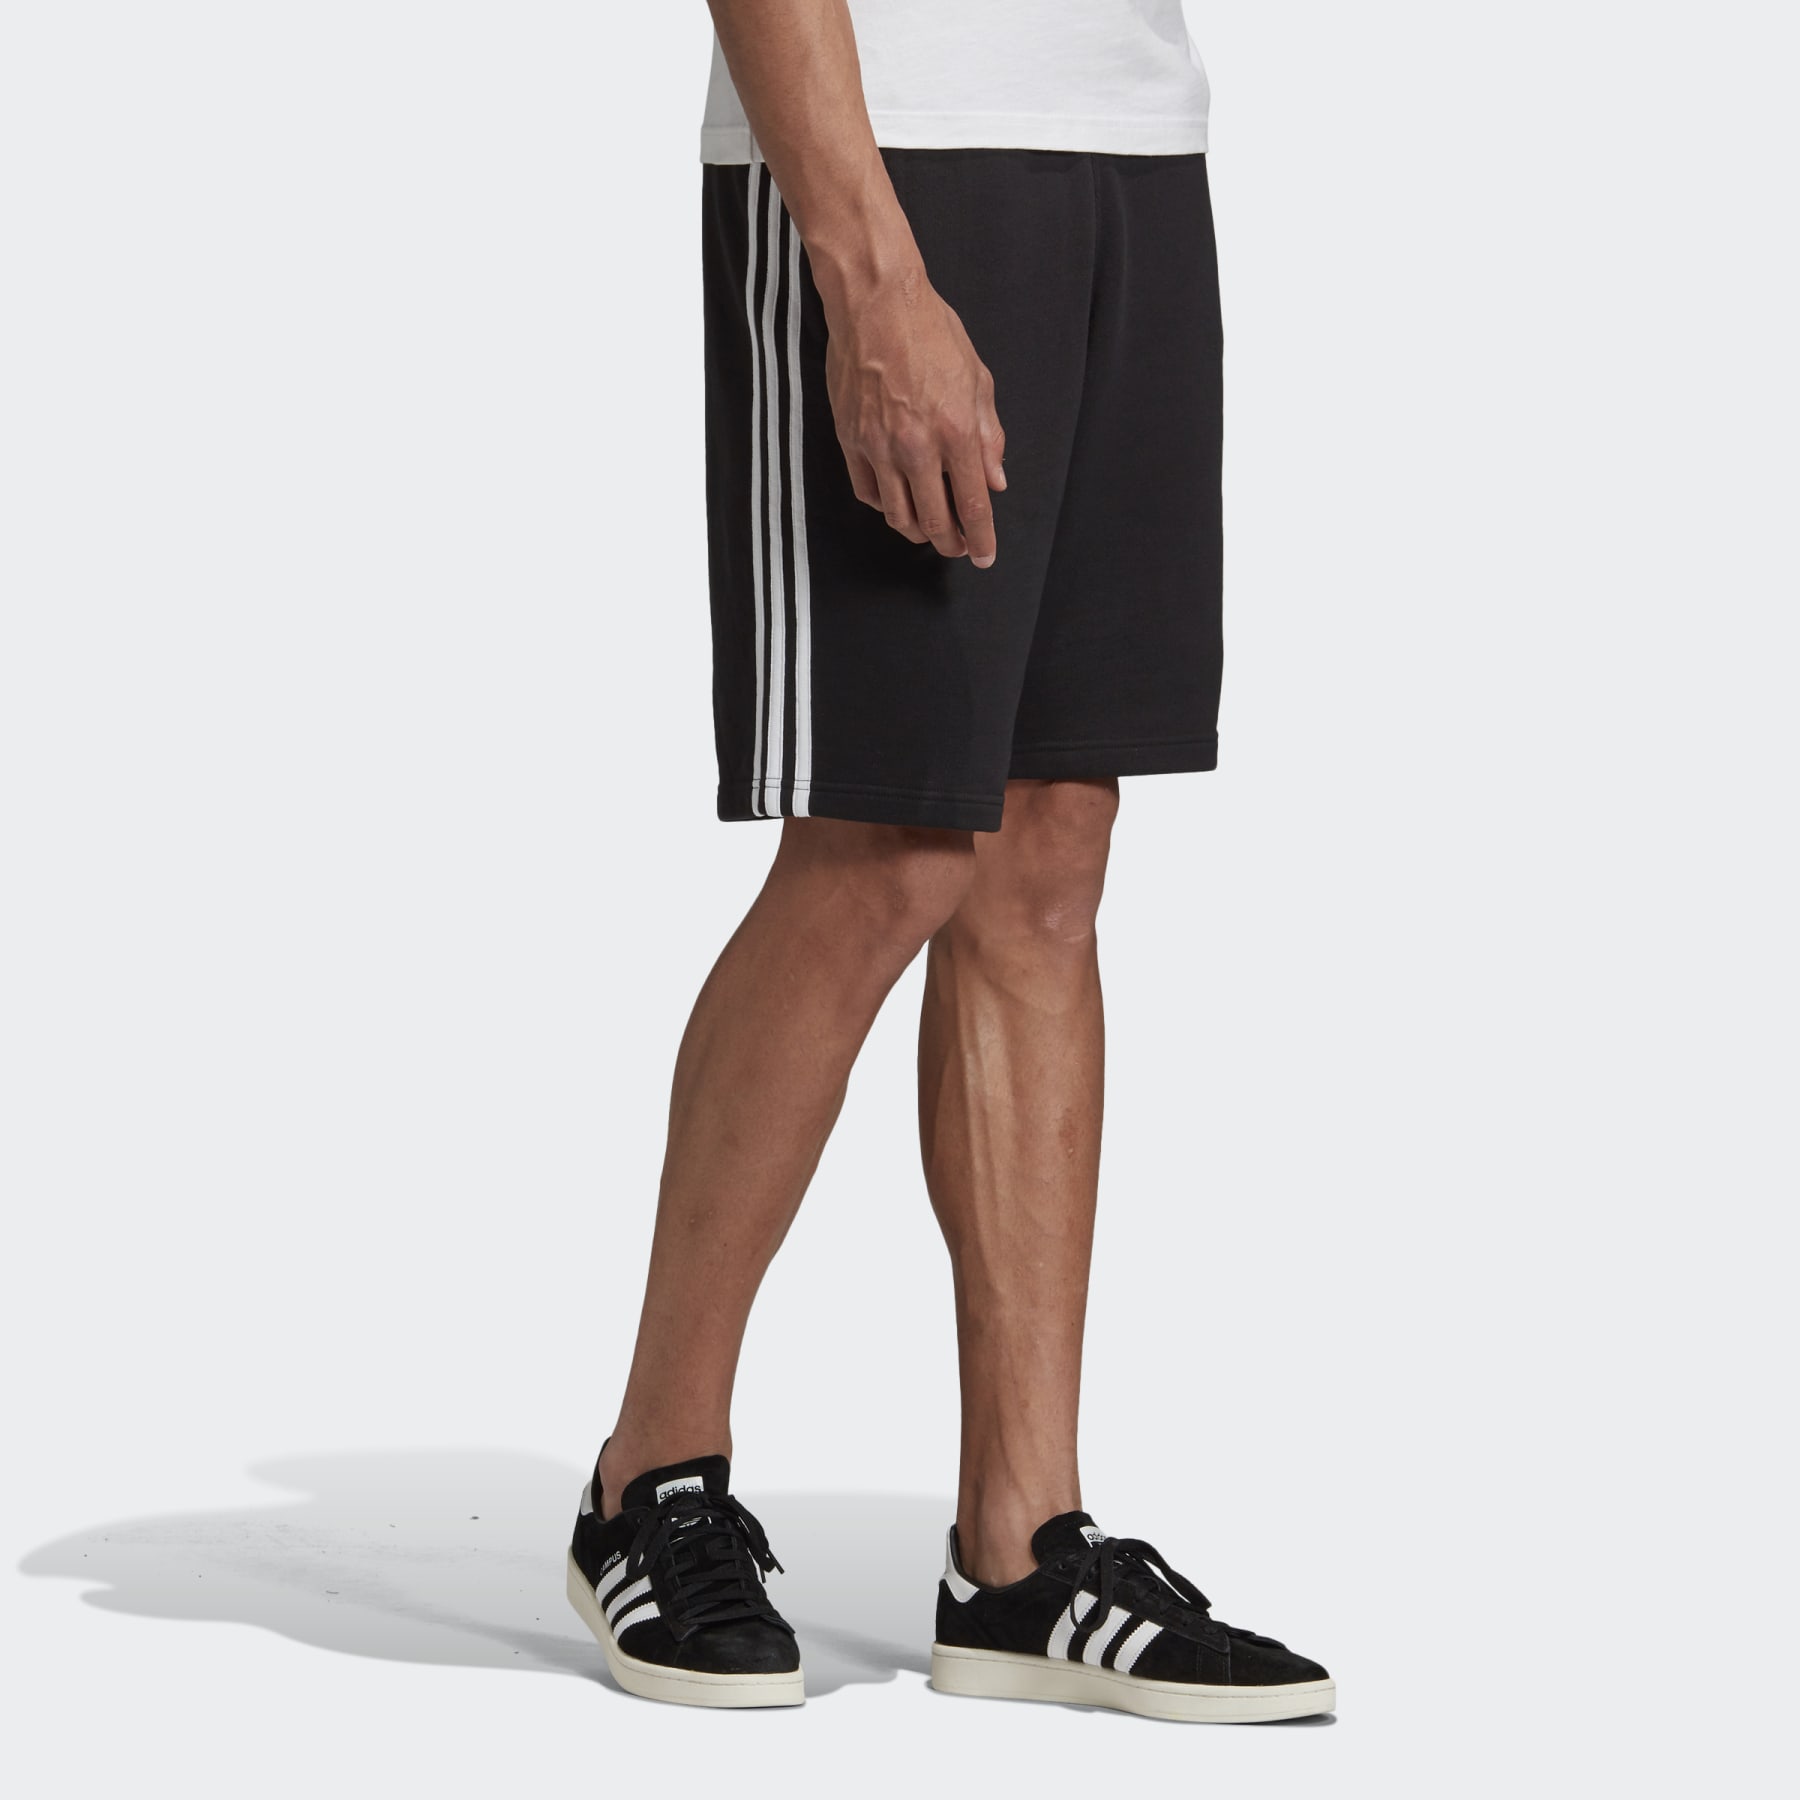 Adidas 3-Stripes Short